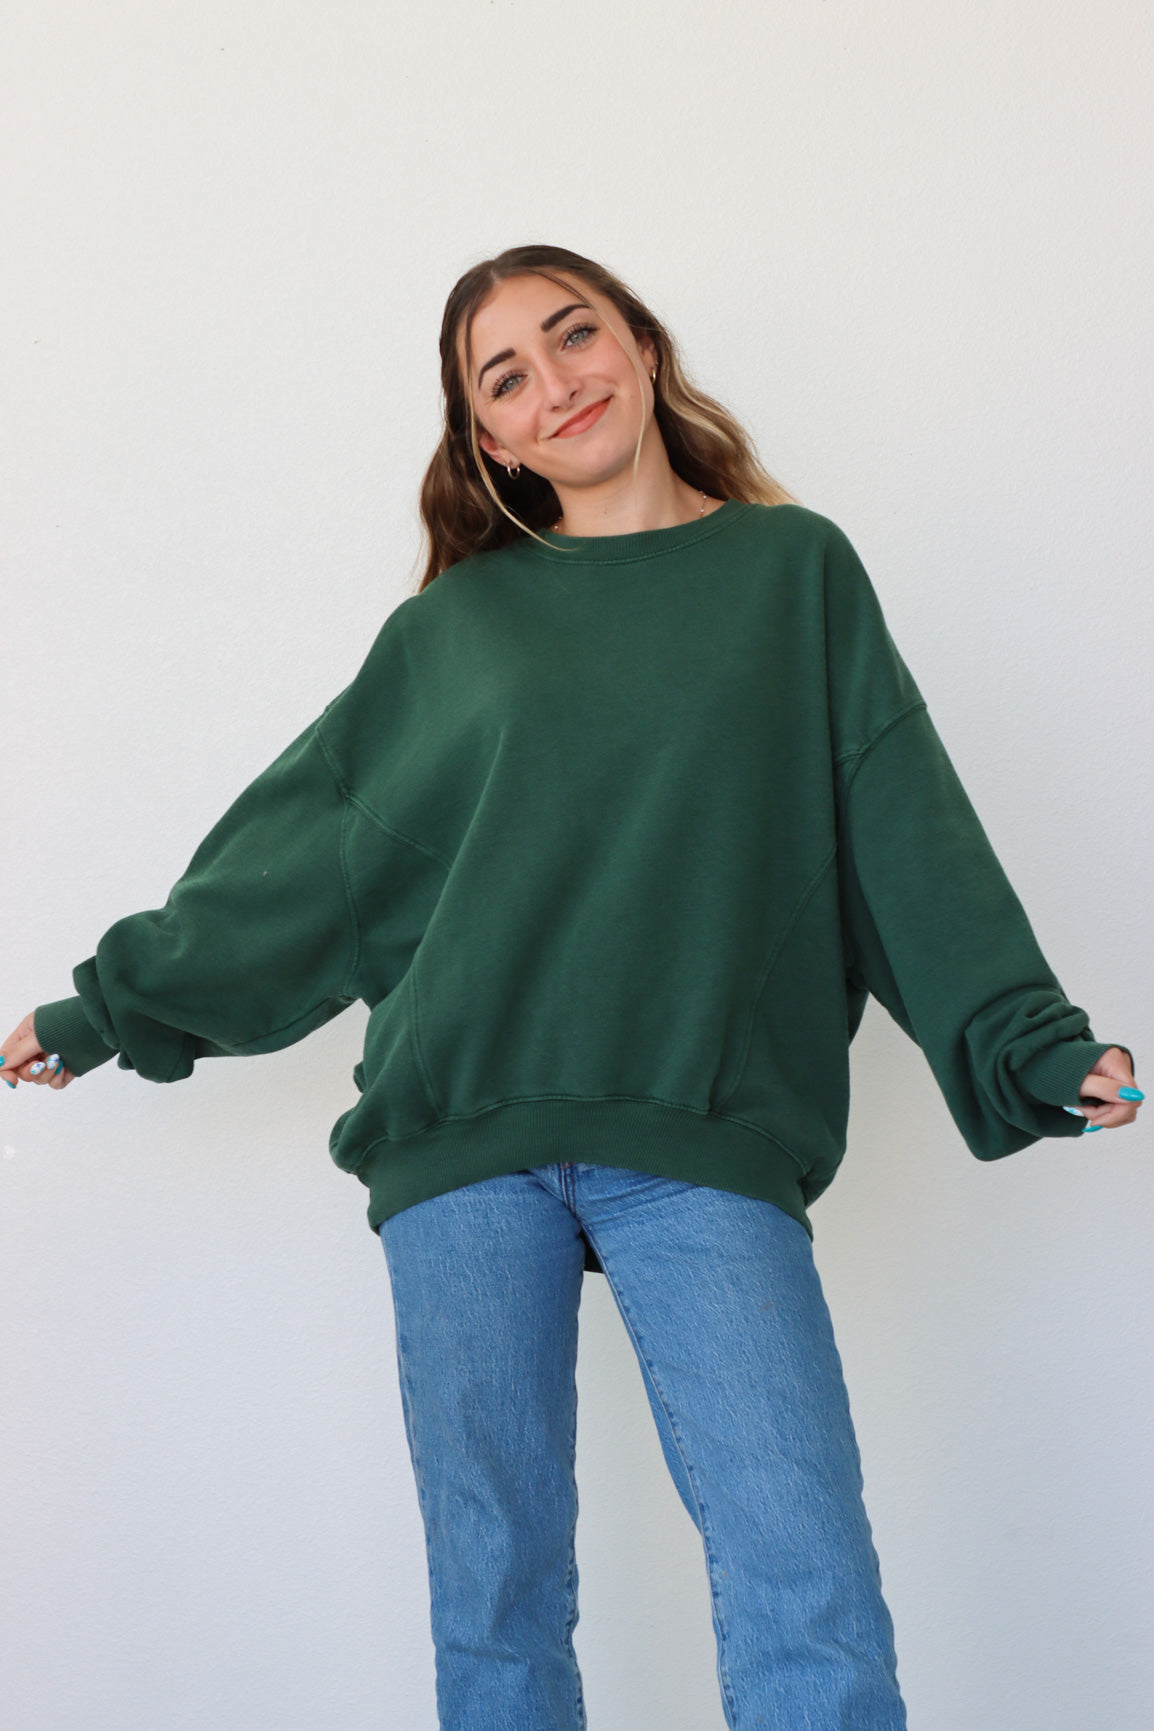 girl wearing dark green crewneck sweatshirt